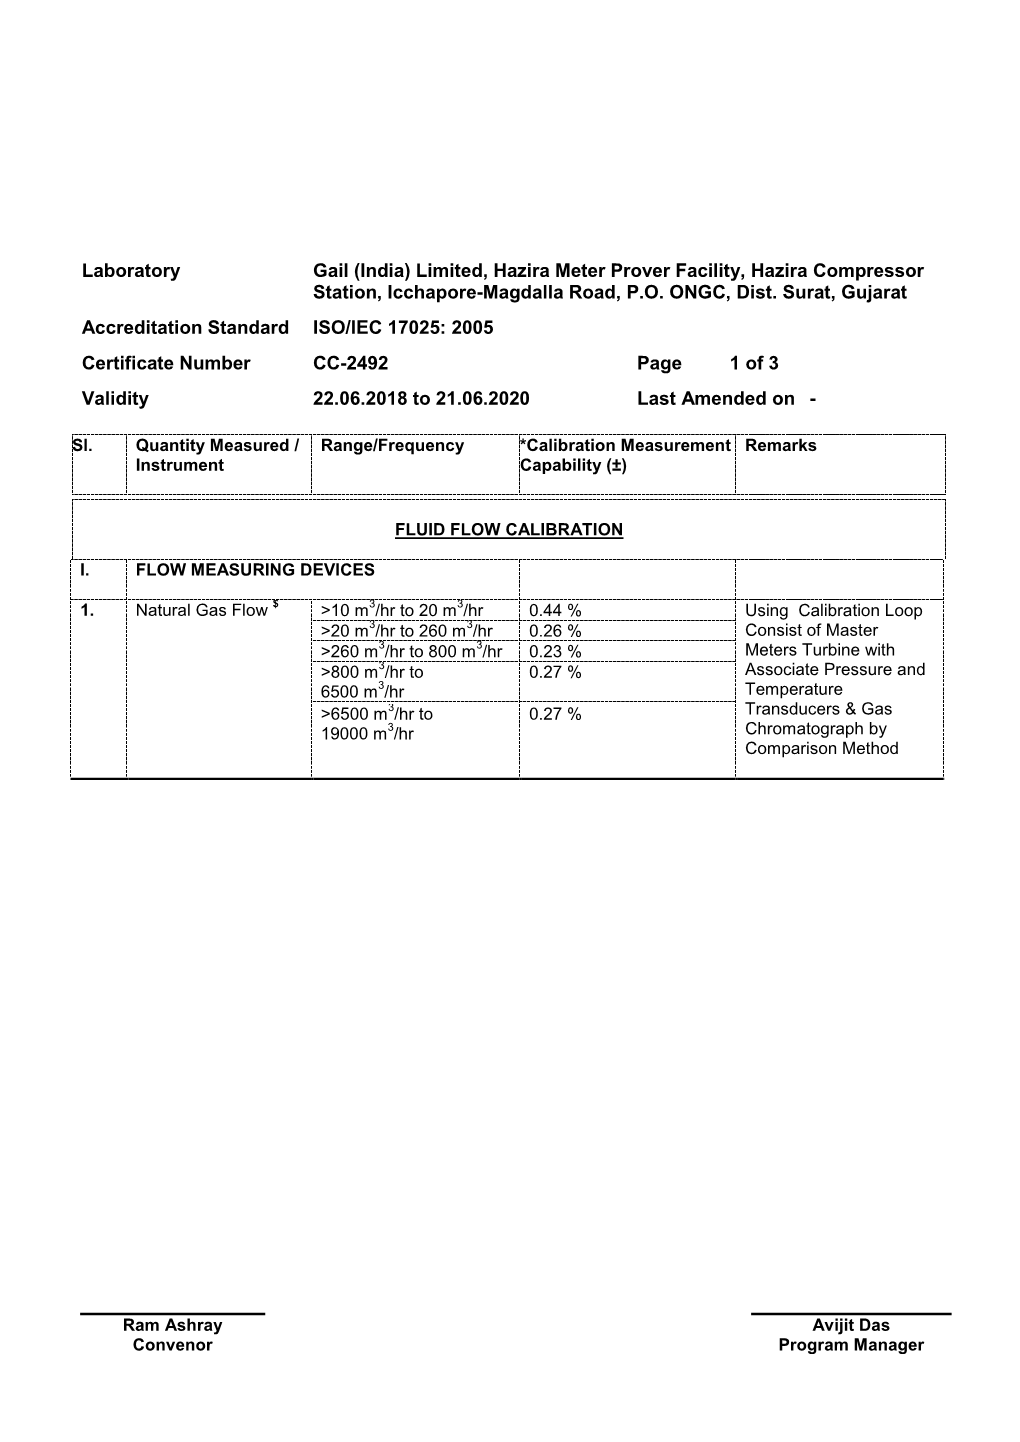 Laboratory Gail (India) Limited, Hazira Meter Prover Facility, Hazira Compressor Station, Icchapore-Magdalla Road, P.O